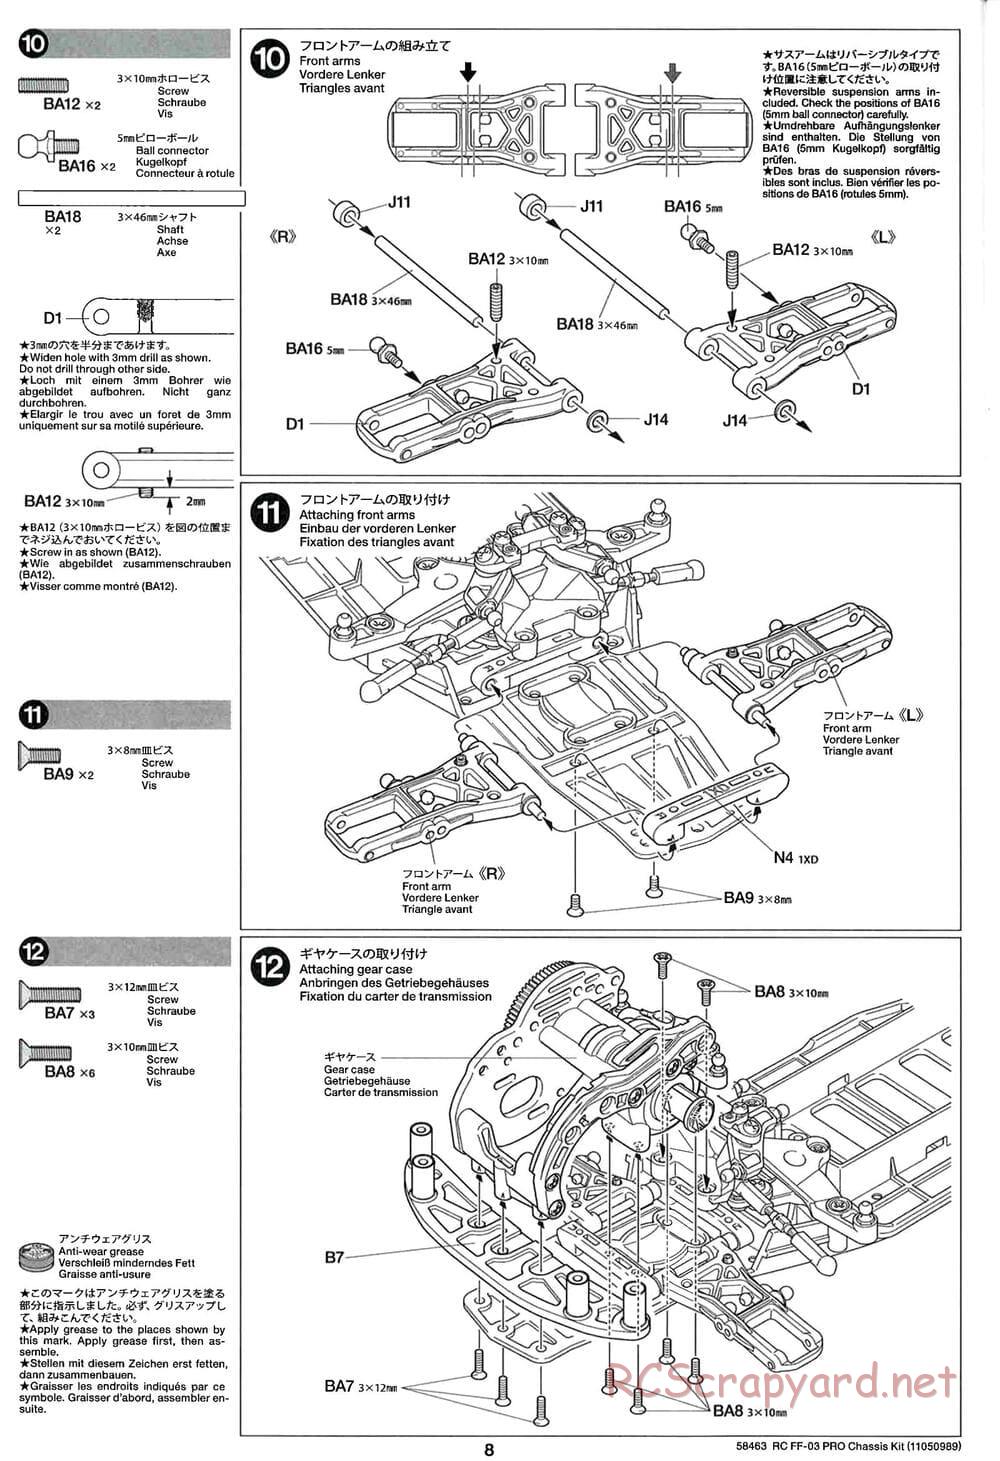 Tamiya - FF-03 Pro Chassis - Manual - Page 8